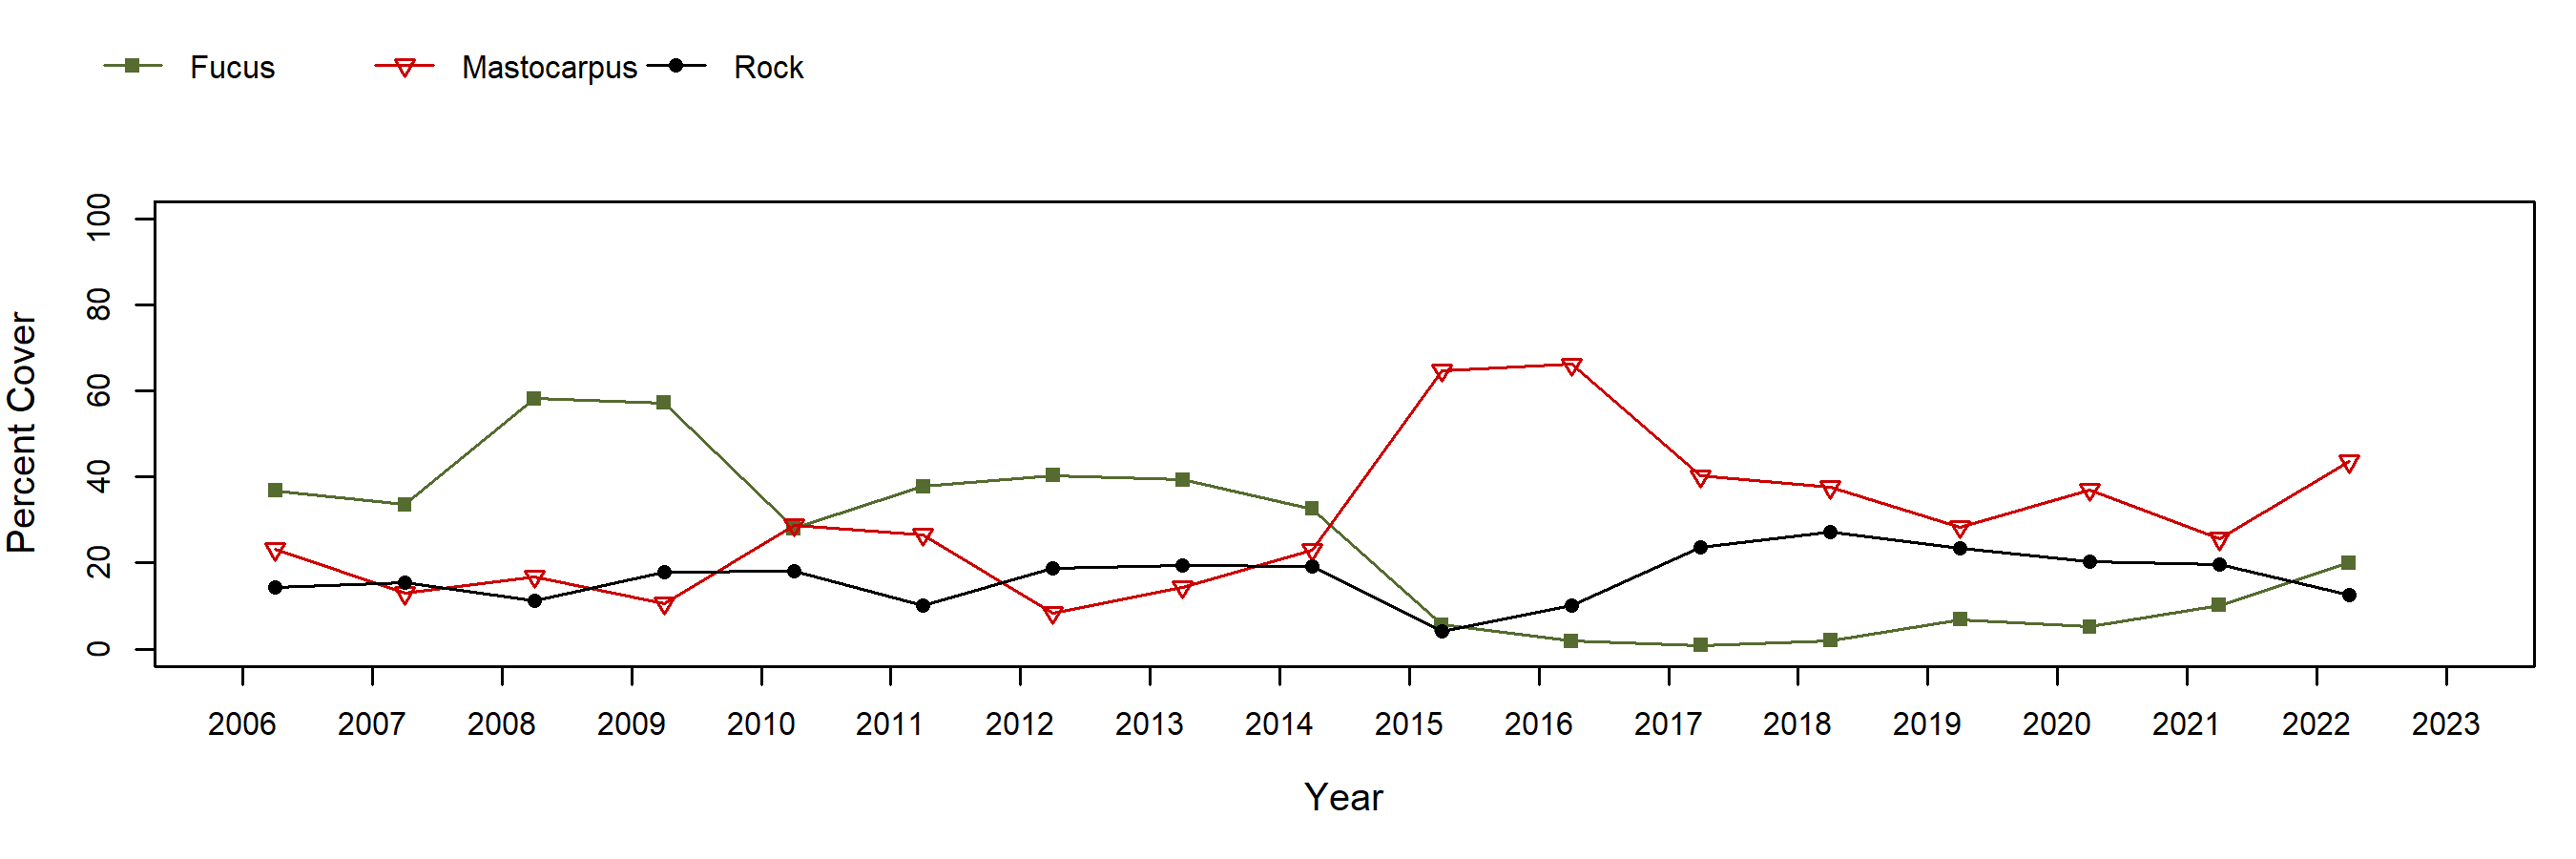 Bolinas Point Fucus trend plot